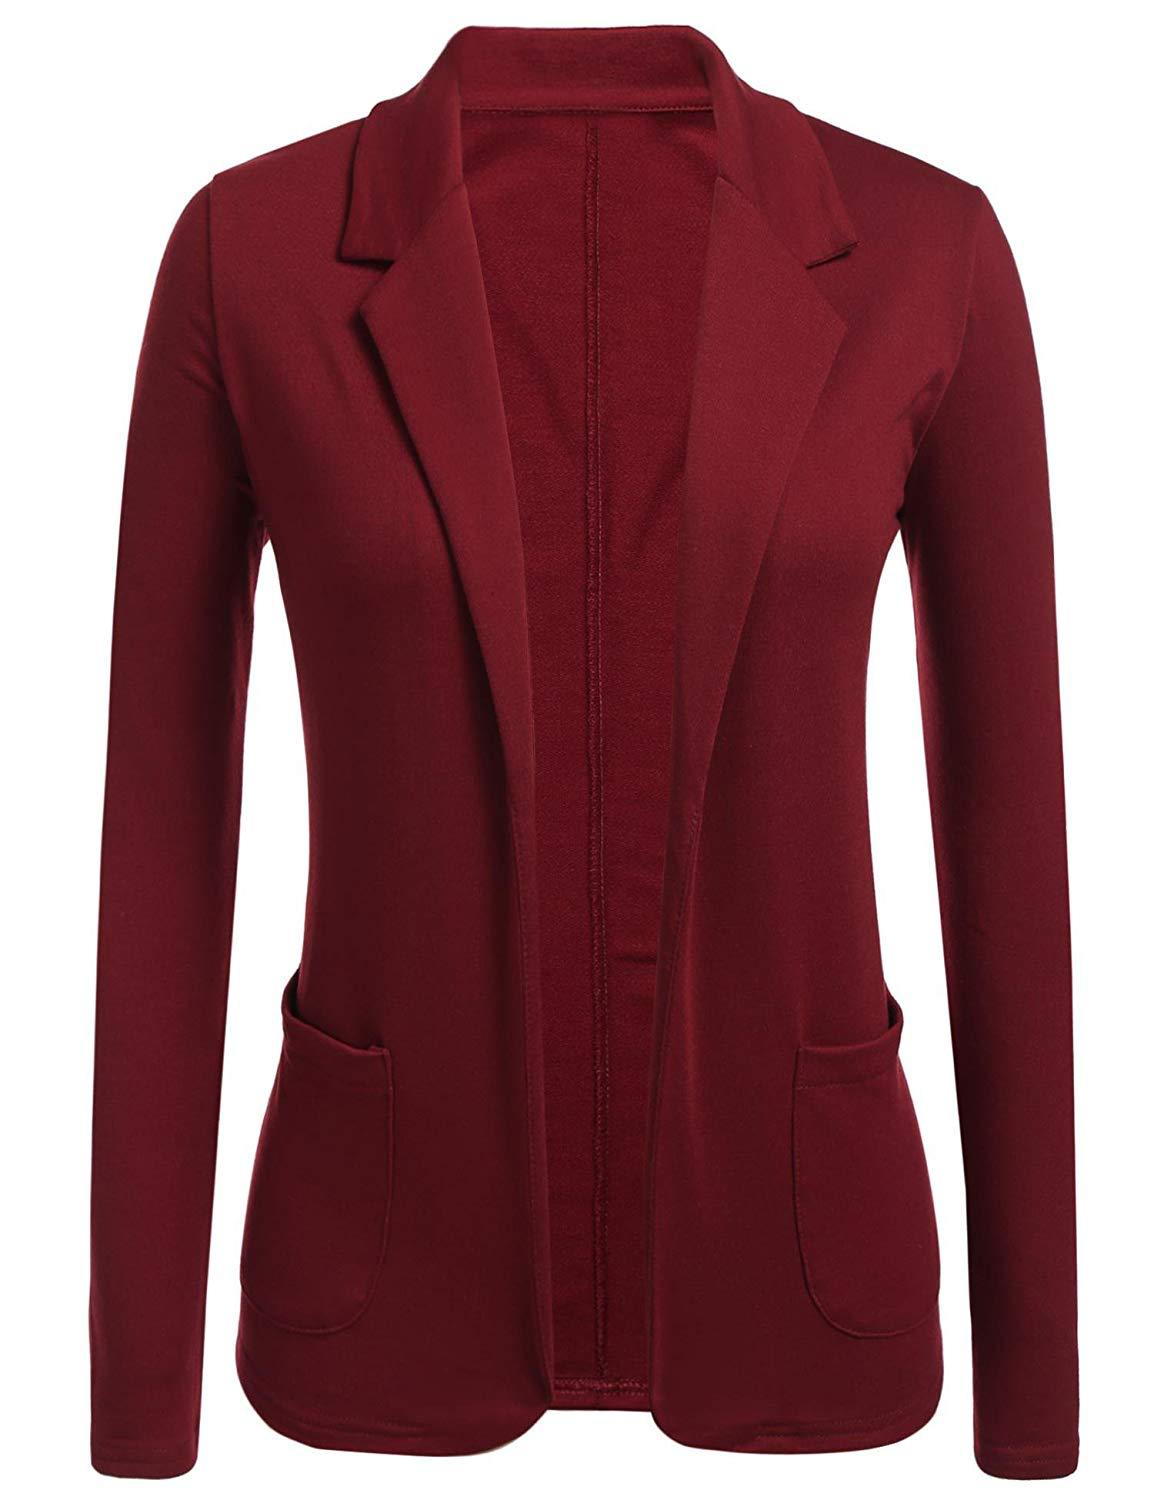 Women Blazer Coat Autumn Casual Long Sleeve Work Office Business Lady Slim Suit Jacket crimson